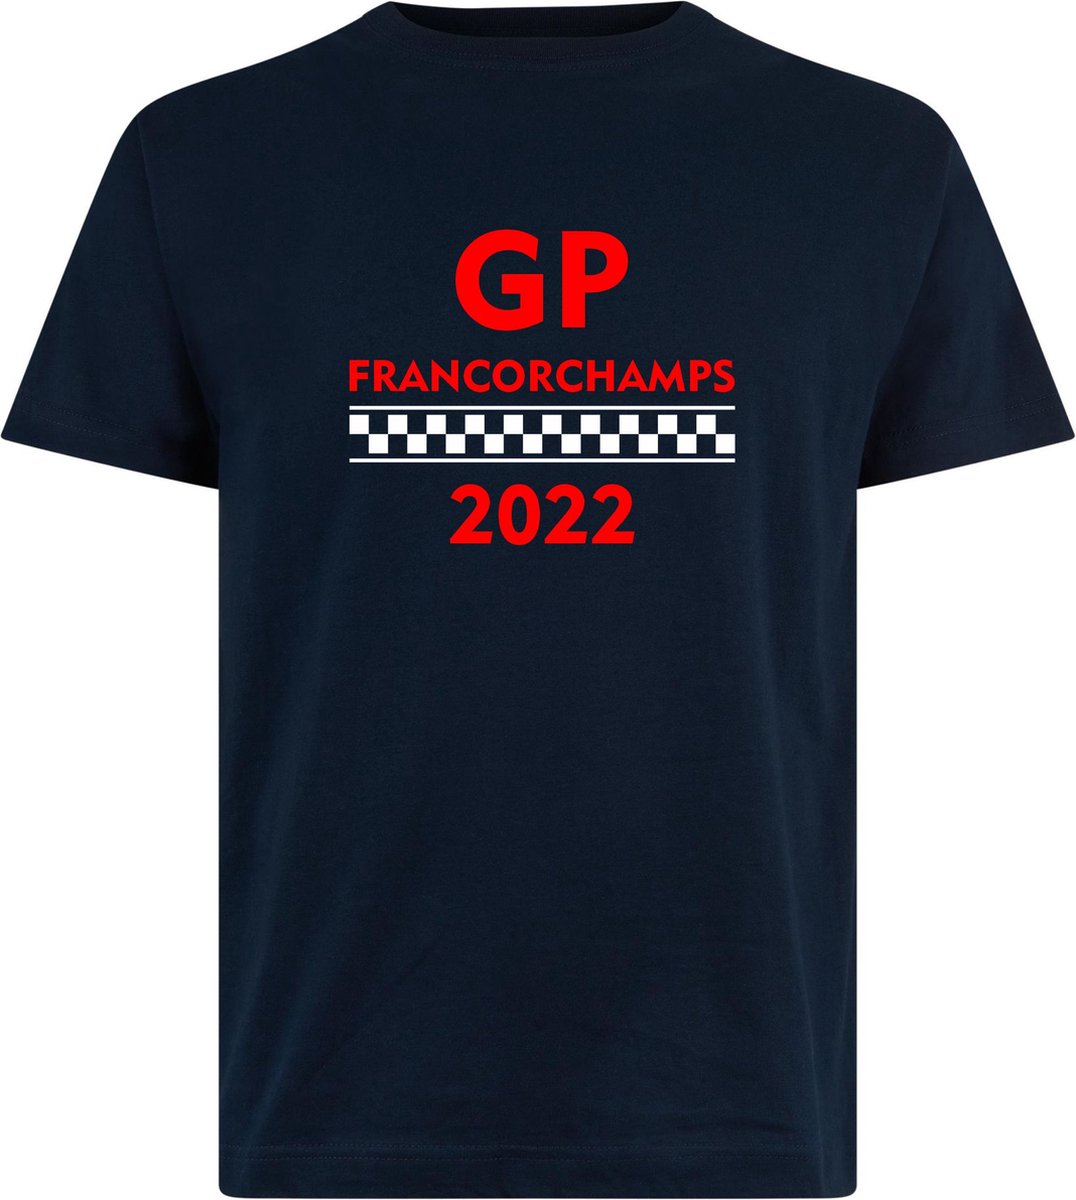 T-shirt kinderen GP Francorchamps 2022 | Max Verstappen / Red Bull Racing / Formule 1 fan | Grand Prix Circuit Spa-Francorchamps | kleding shirt | Navy | maat 68